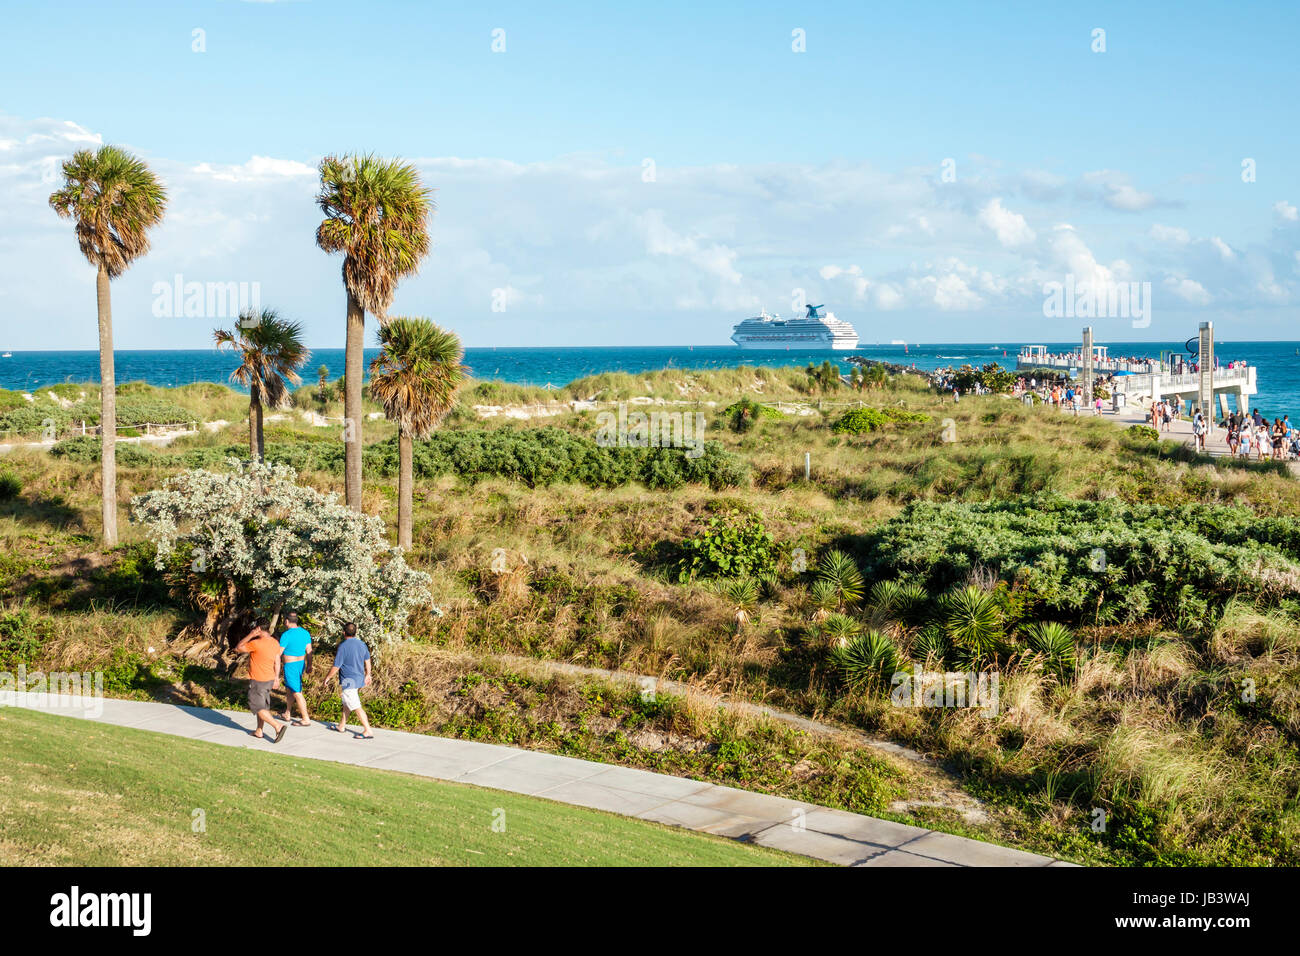 Miami Beach Florida,Atlantic Ocean,South Pointe Park,walking path,native dune,grass,vegetation,ocean view,pier,departing cruise ship,Port,FL170401014 Stock Photo